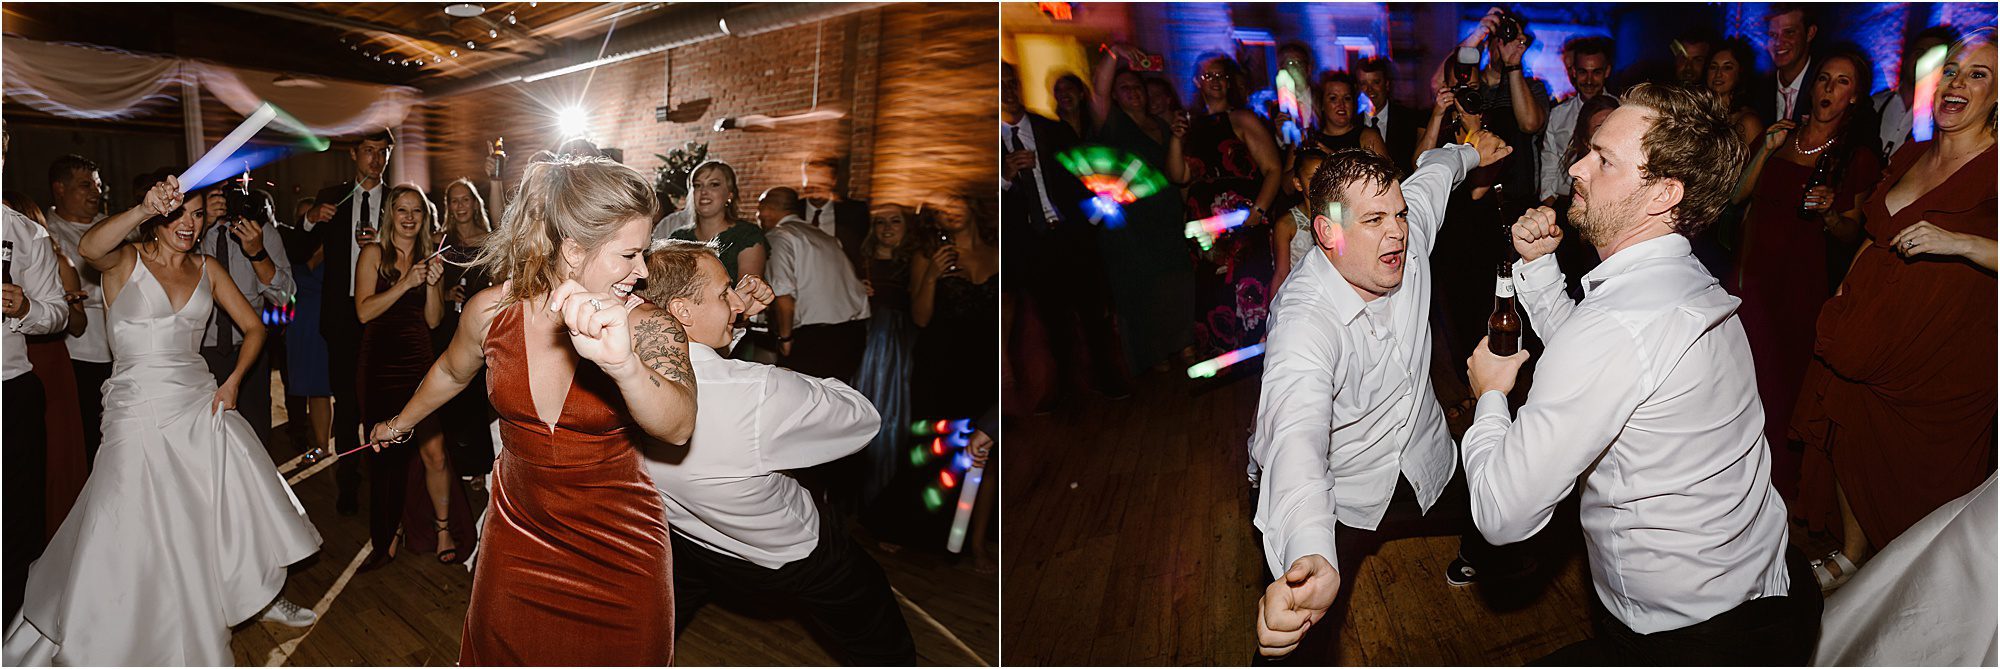 epic dancing at wedding reception